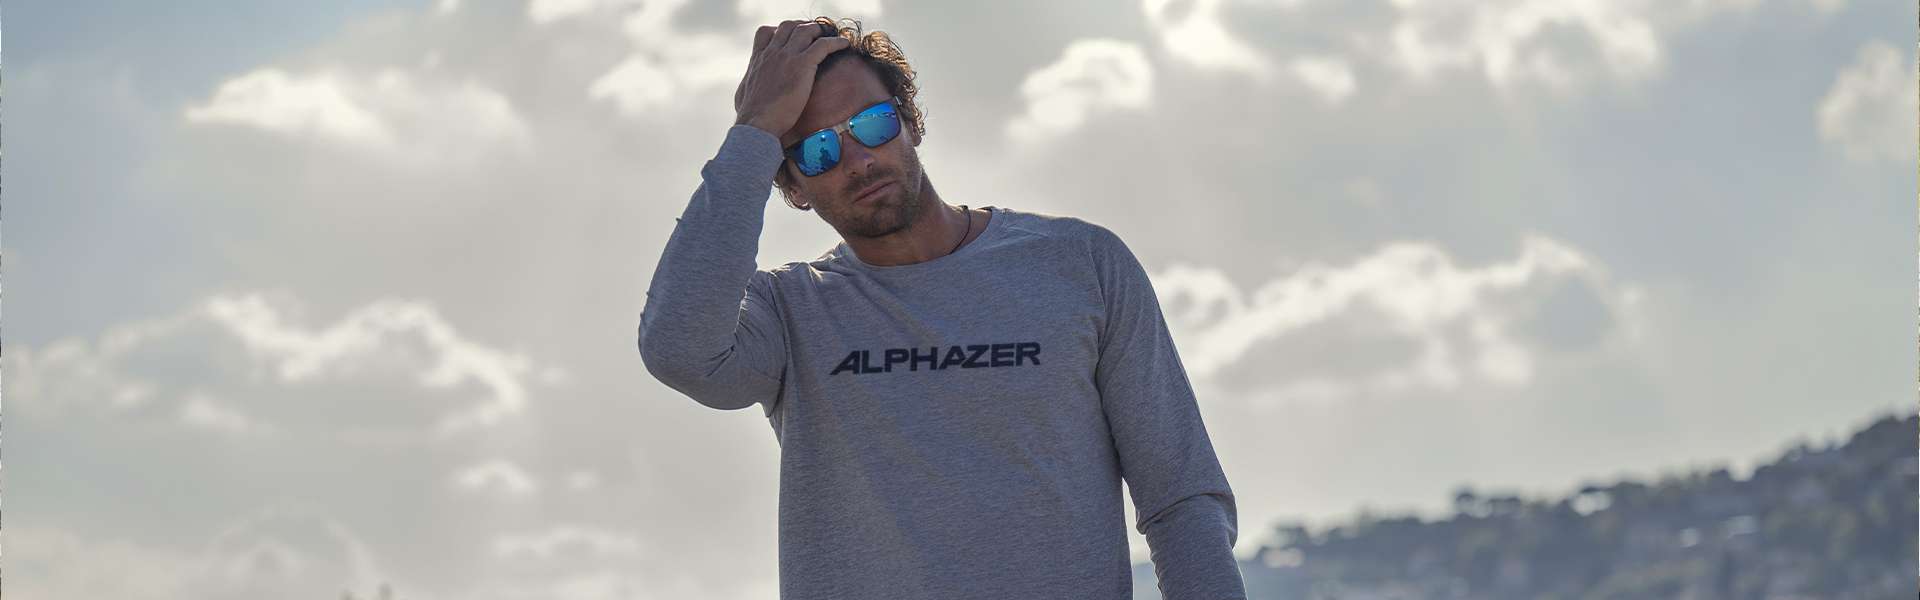 Interview: Alphazer TALK with Matteo Iachino